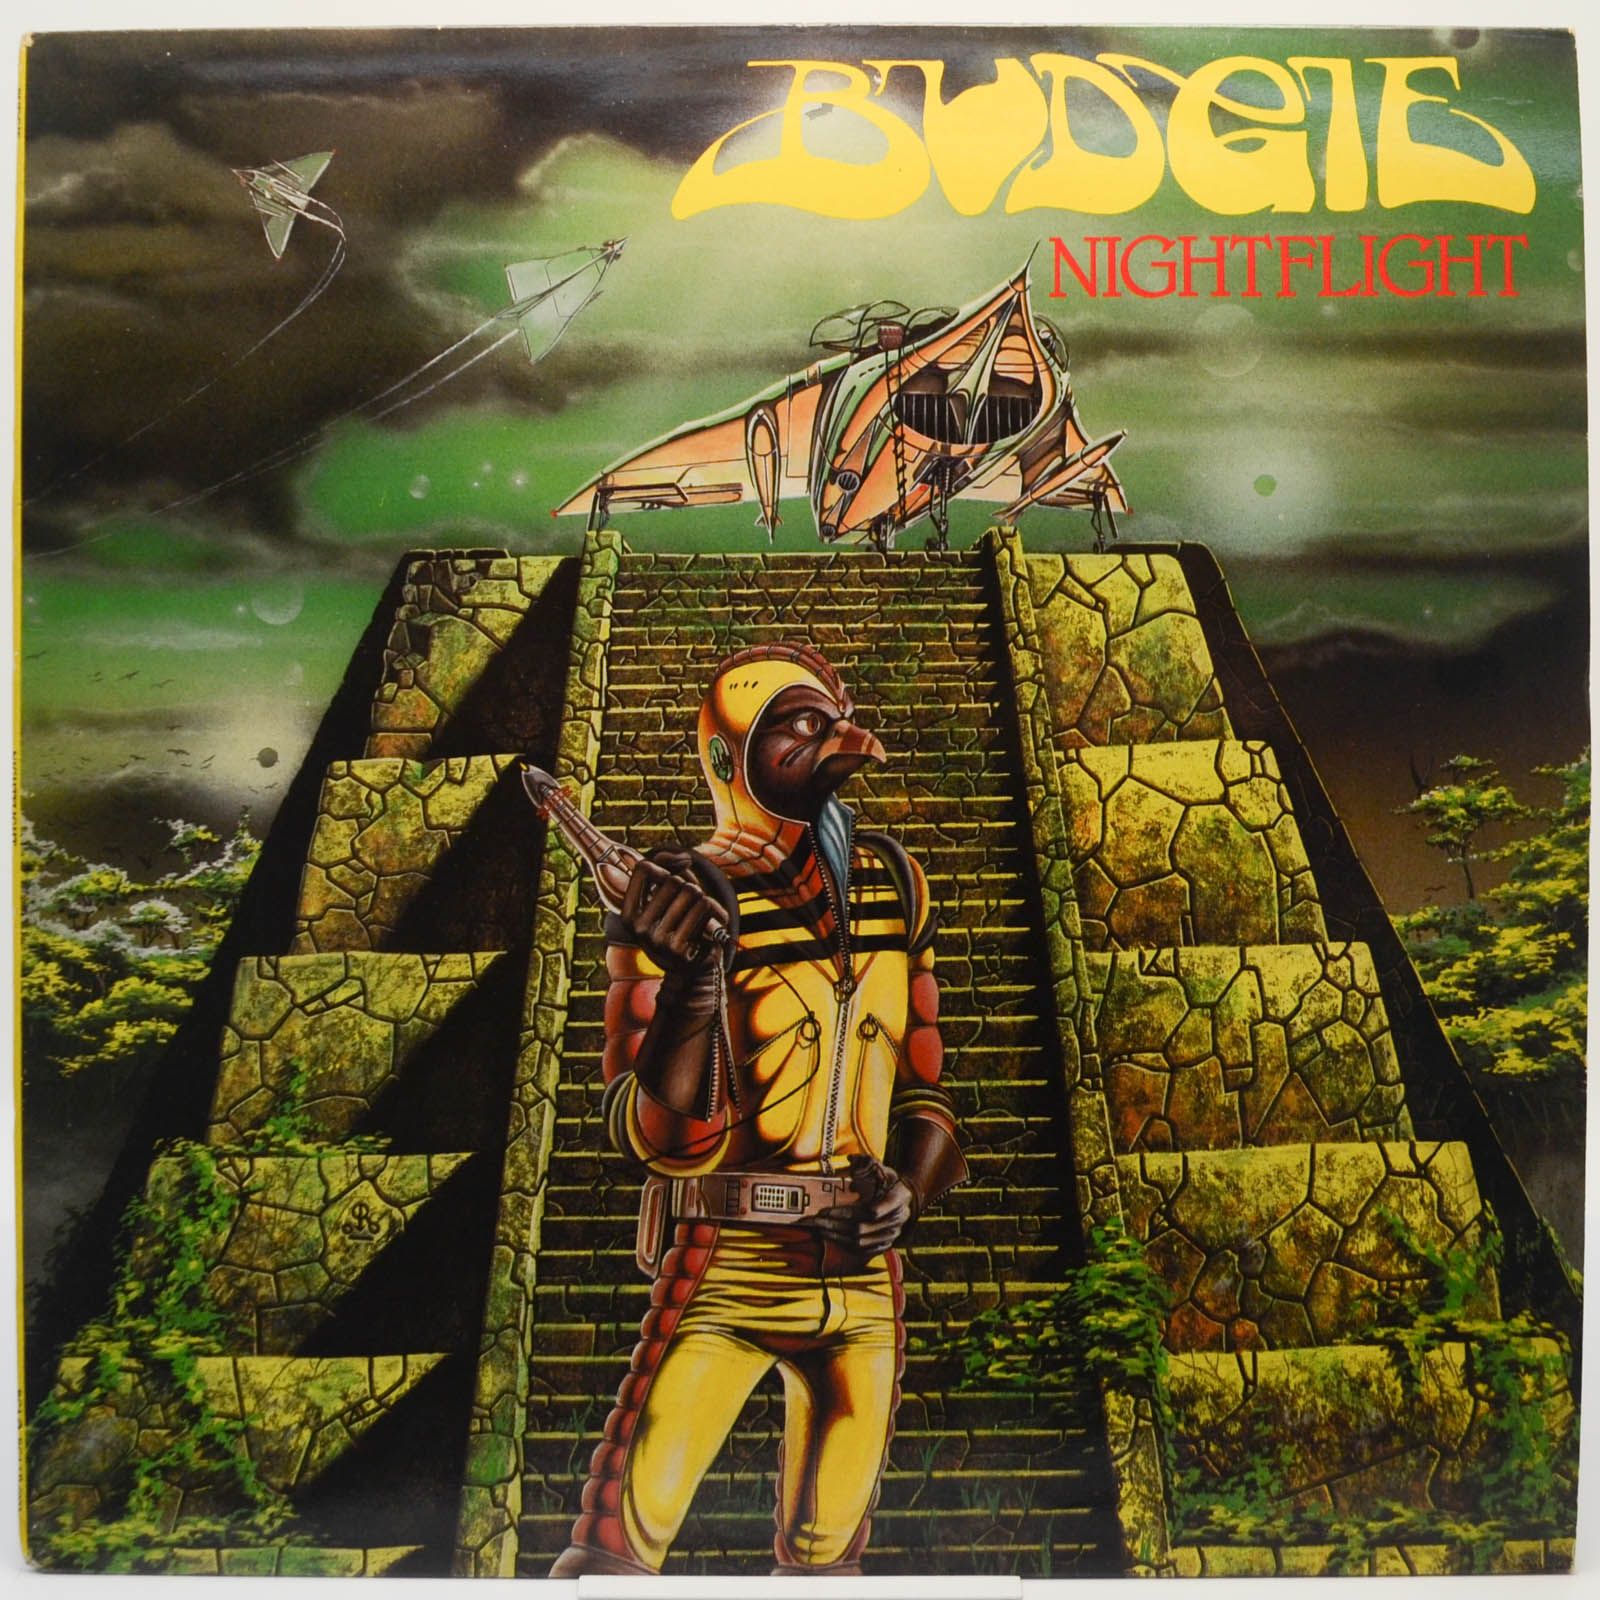 Budgie — Nightflight (UK), 1981